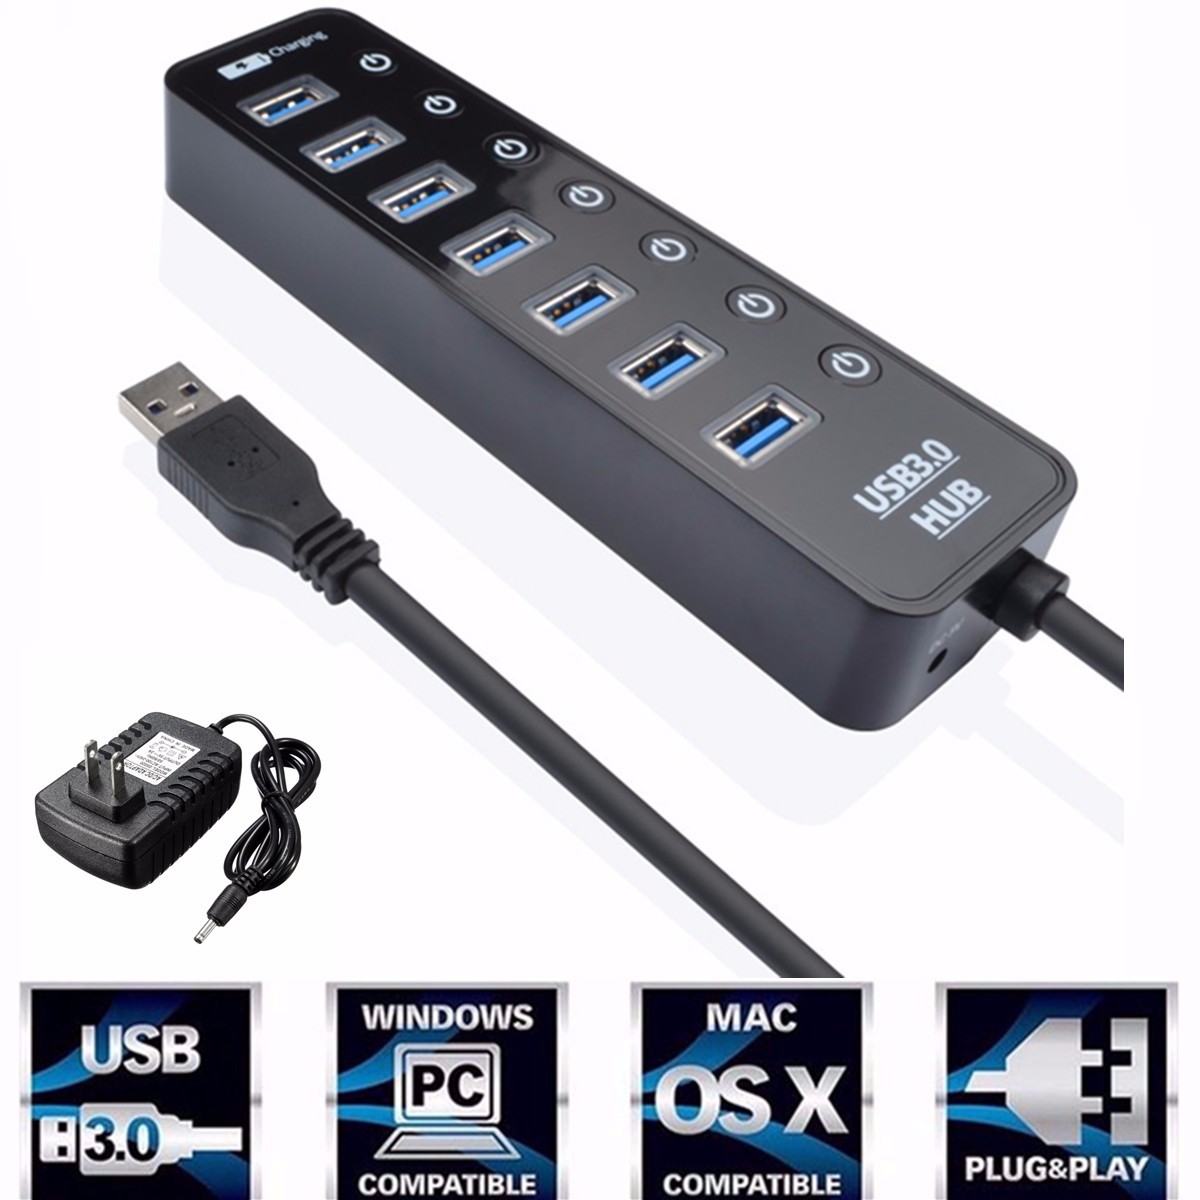 7-USB-Ports-Hub-Extender-splitter-USB-multi-connector-With-US-regulatory-plug-Adapter-1186319